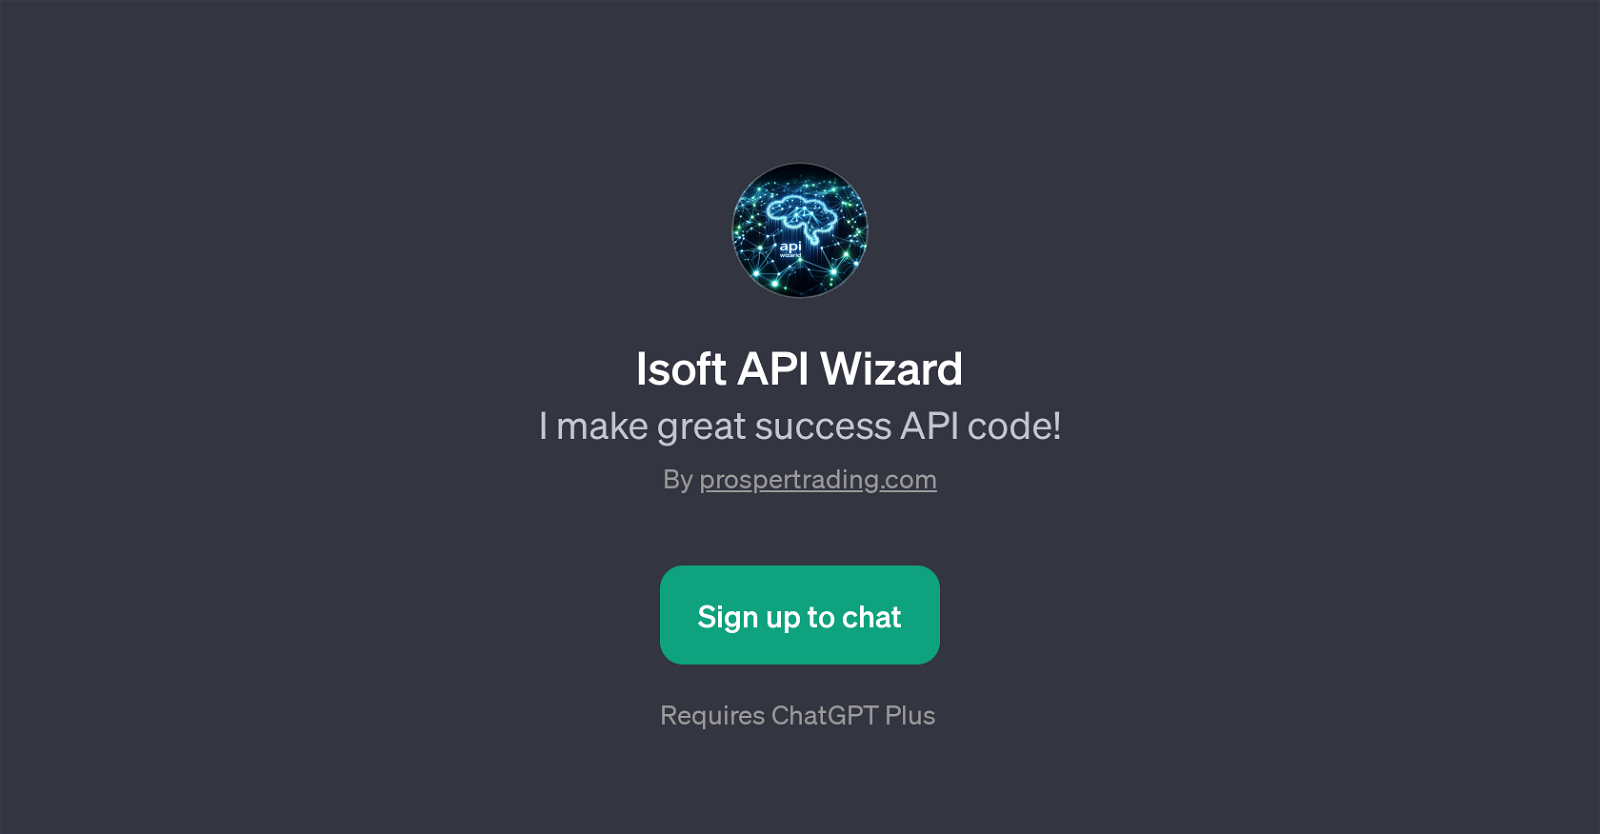 Isoft API Wizard website